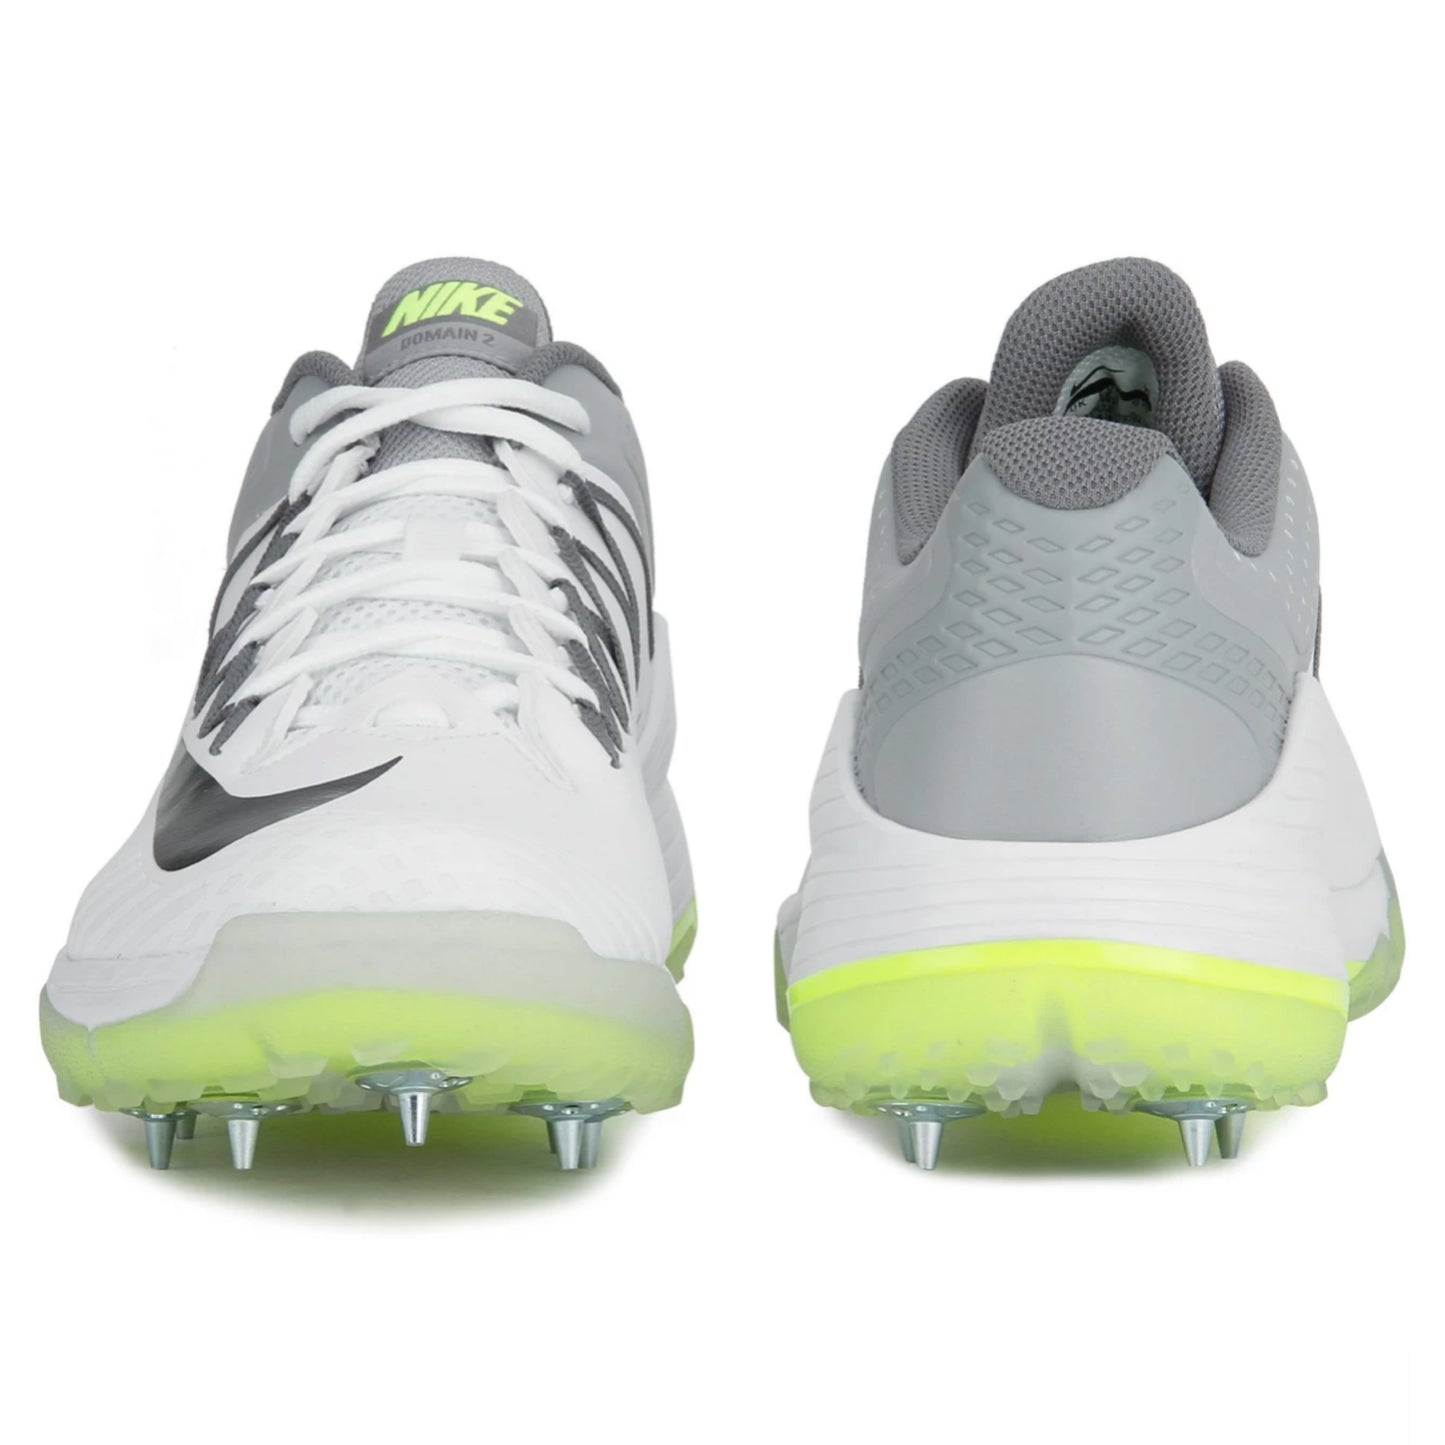 Nike Domain 2 Spike Cricket Shoes - White/Green/Grey